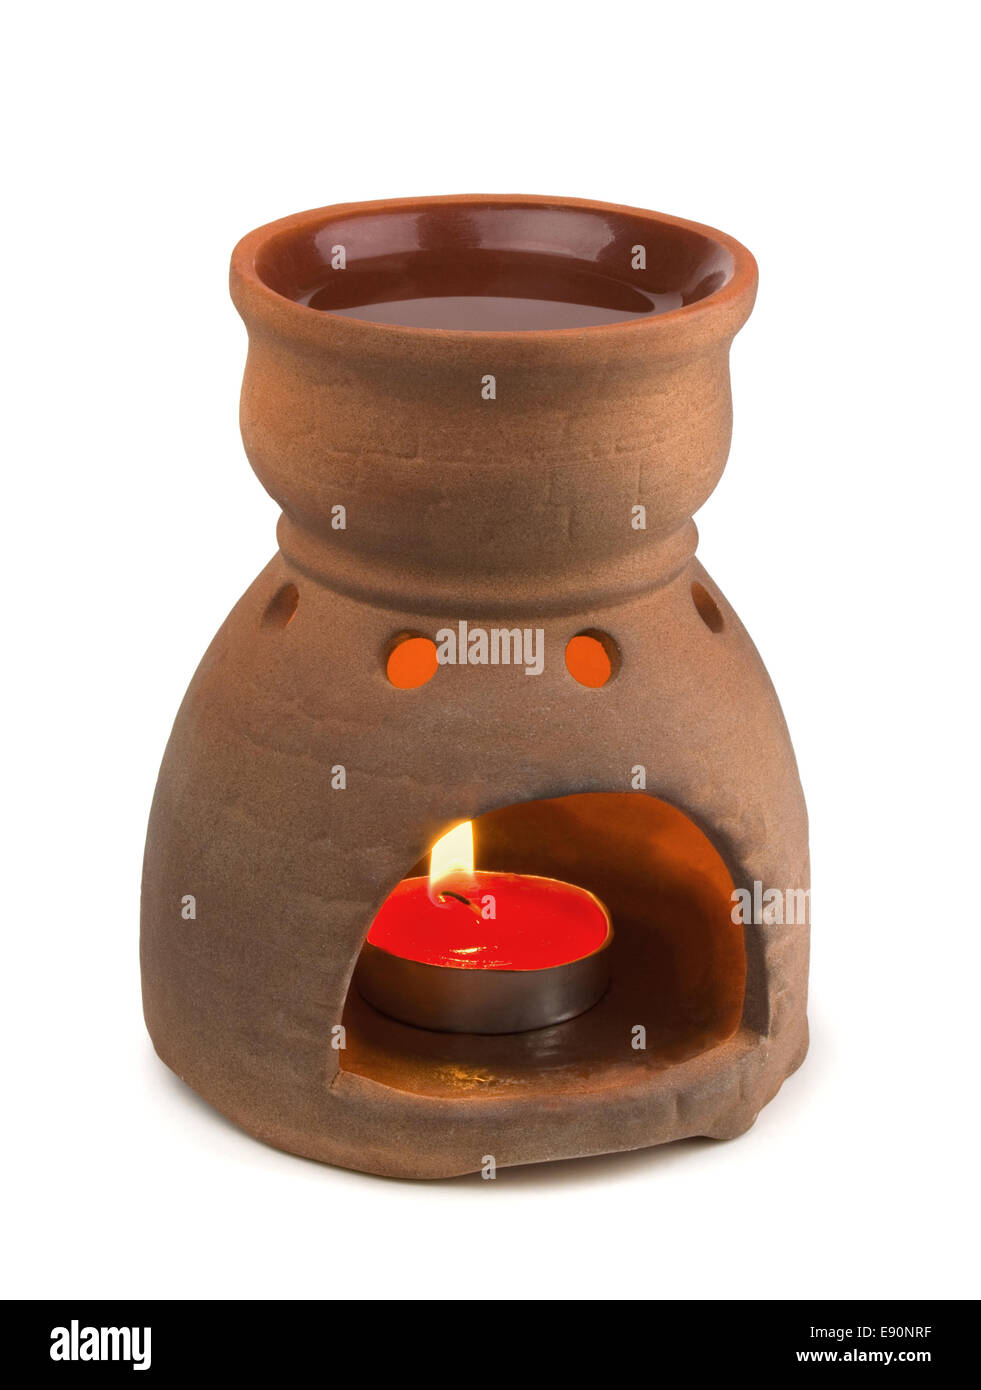 Aromatherapy oil burner Stock Photo